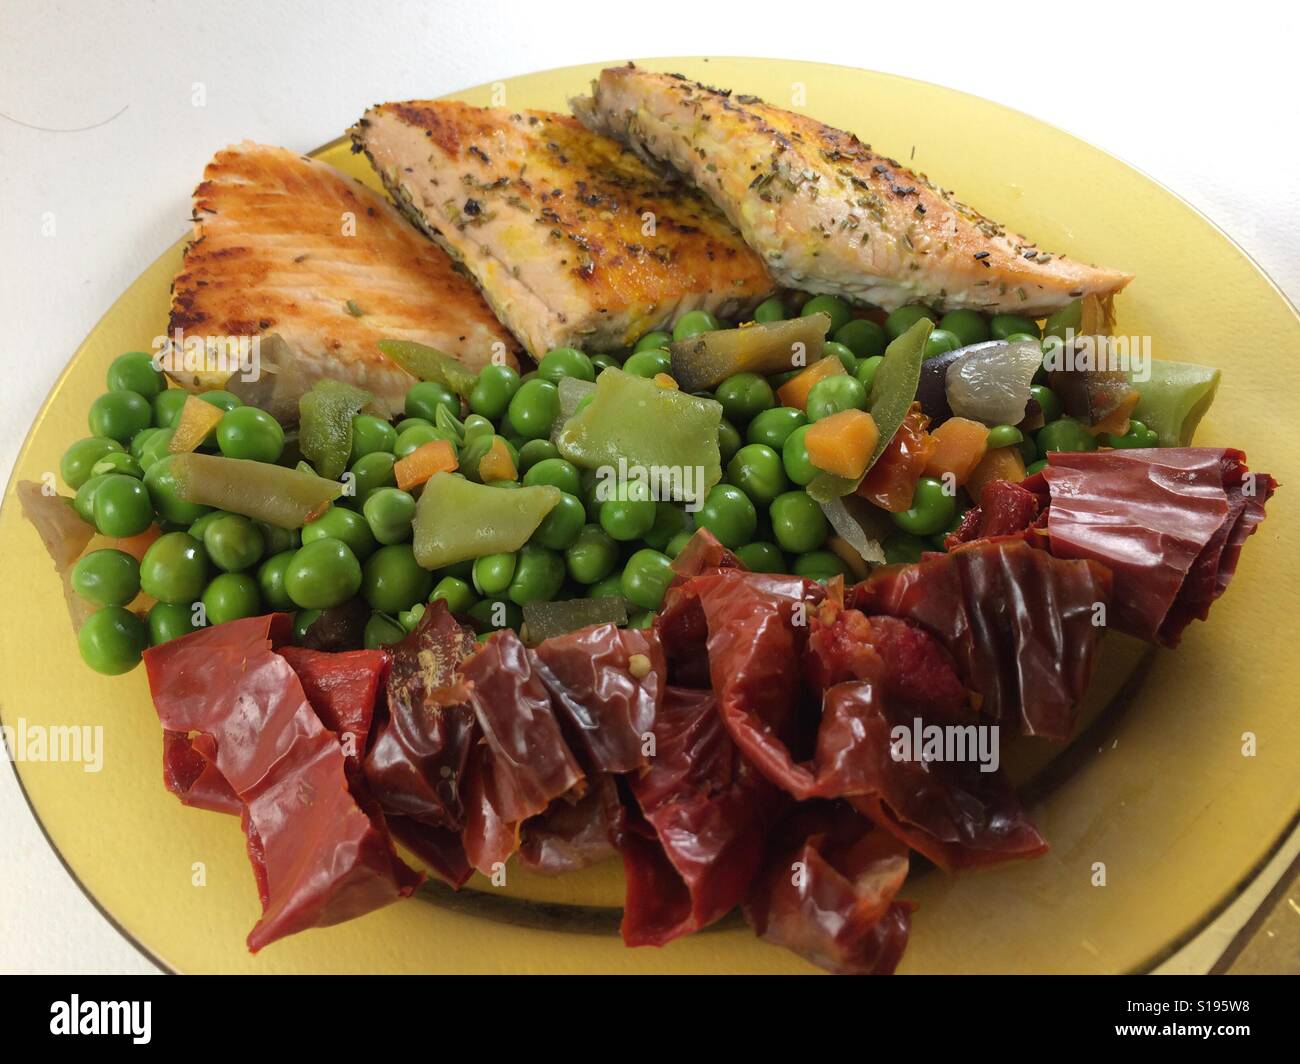 Roasted Salmon with veggies Stock Photo